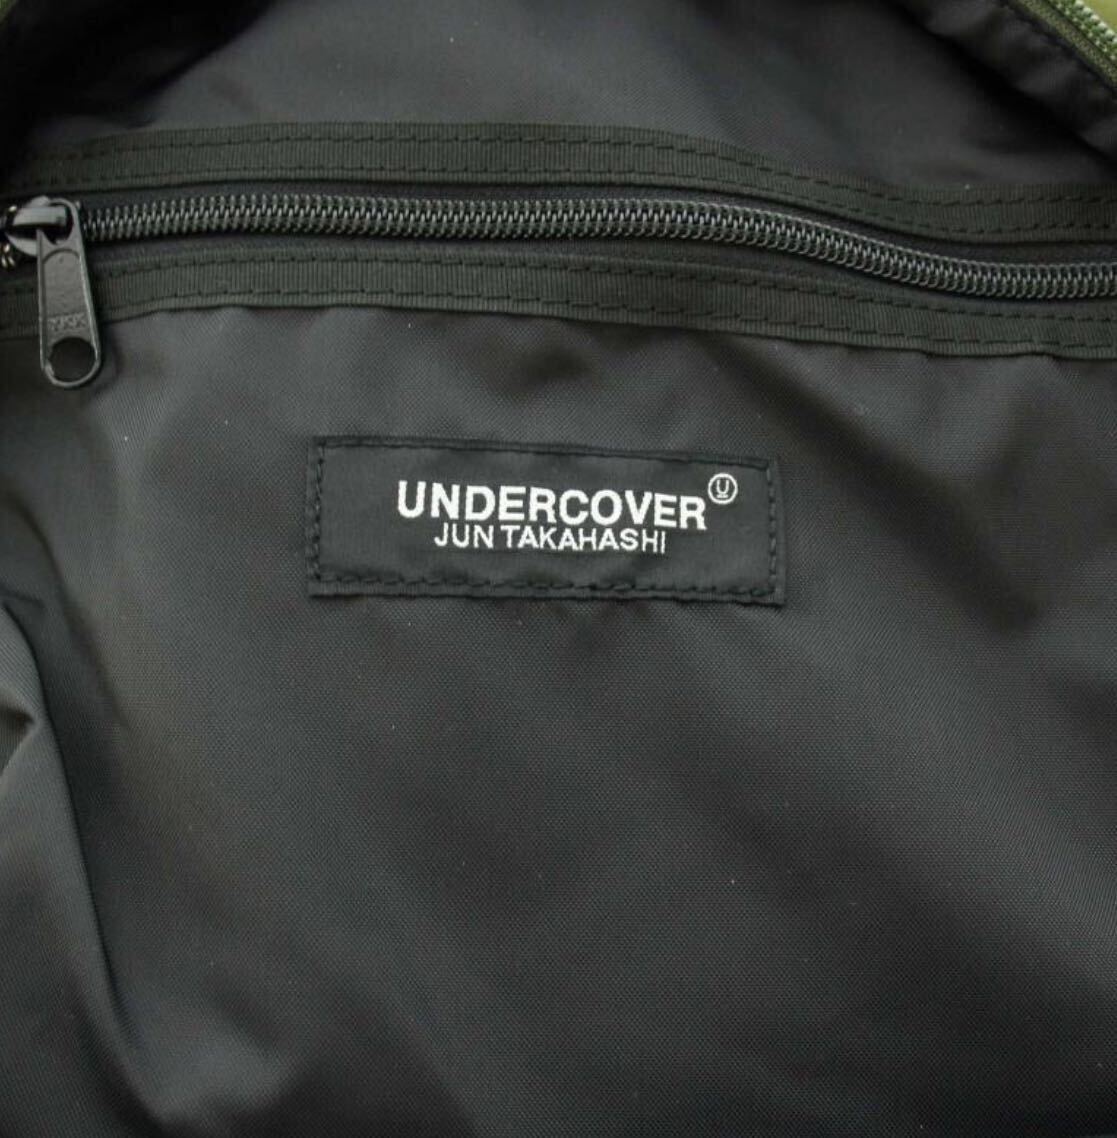  undercover UNDERCOVER 23SS нейлон рюкзак рюкзак повседневный рюкзак F хаки желтый UC1C4B01-2